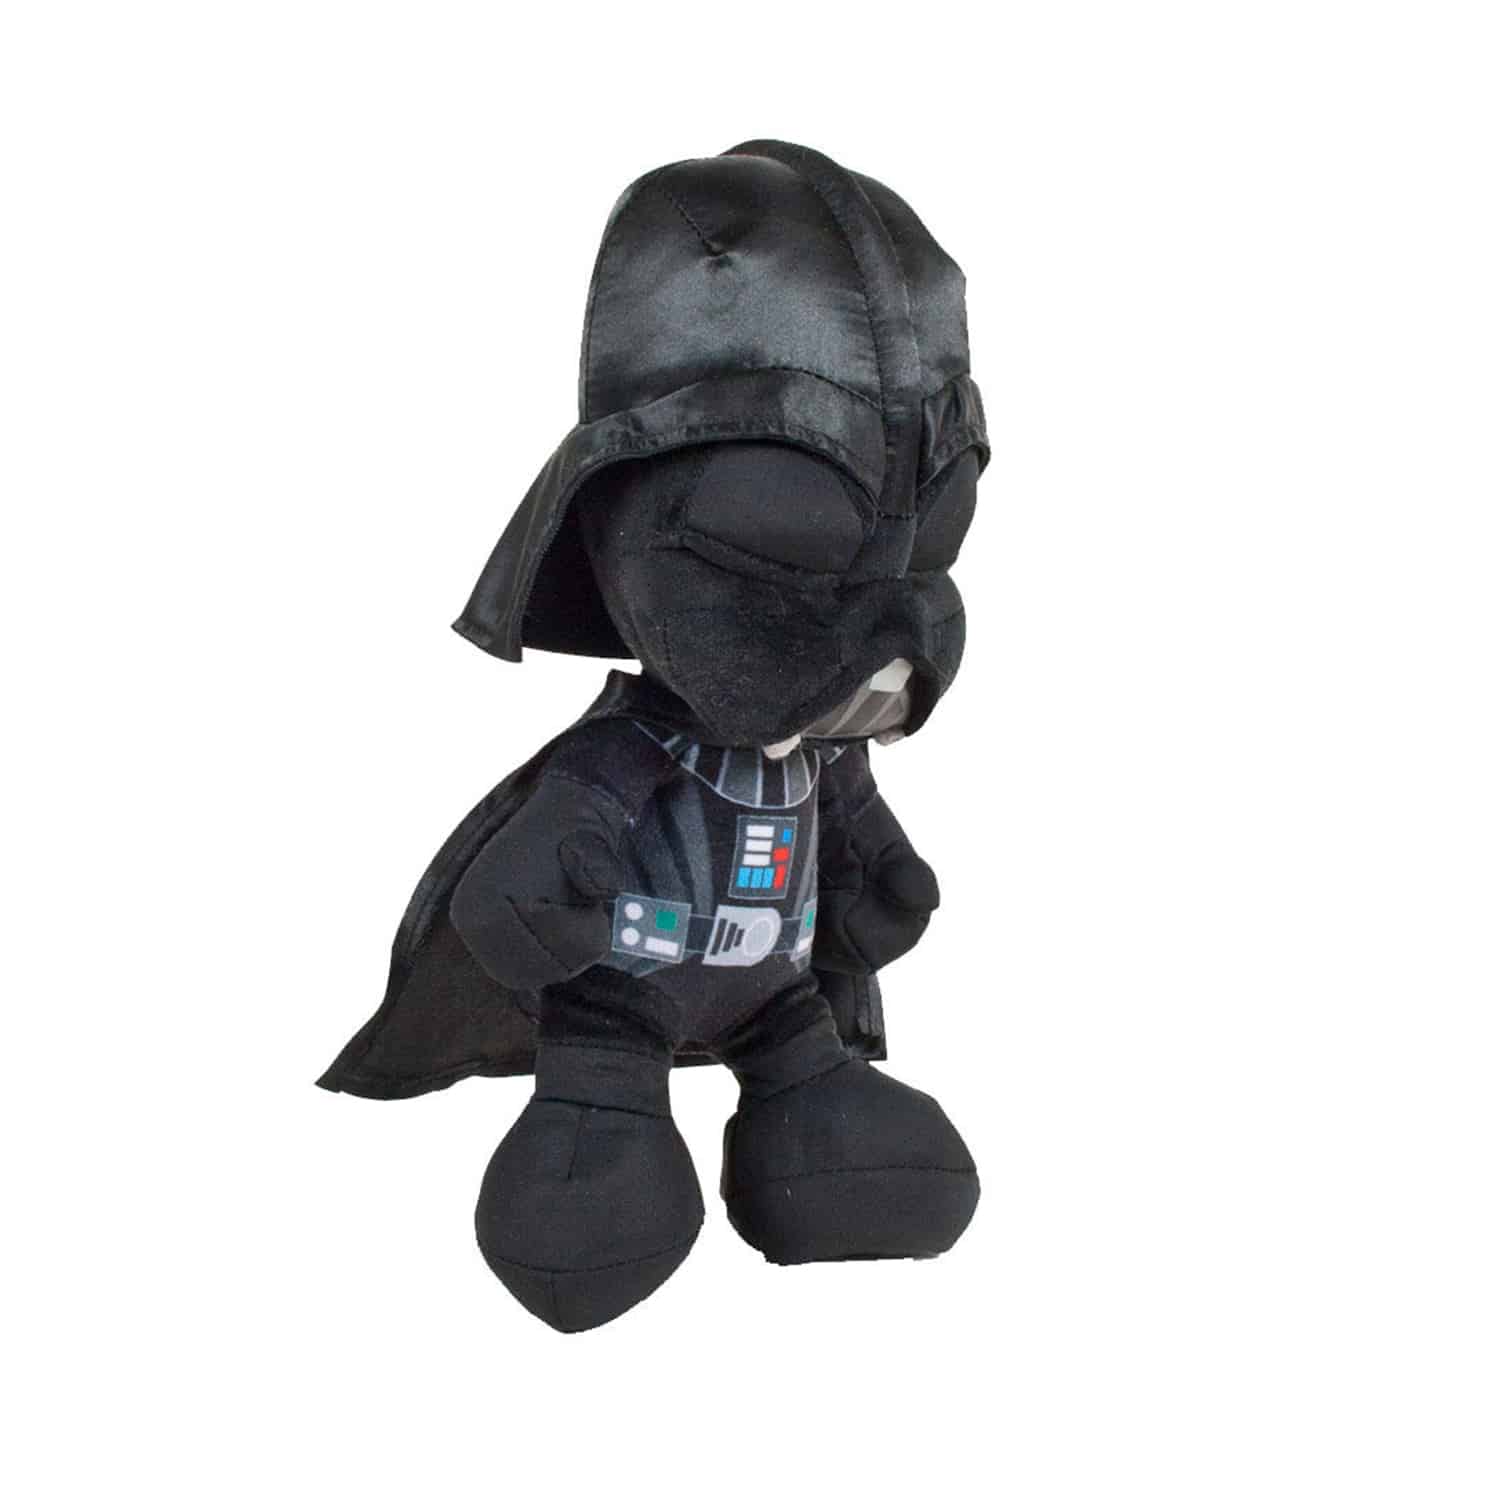 Star Wars - Darth Vader Plush Toy